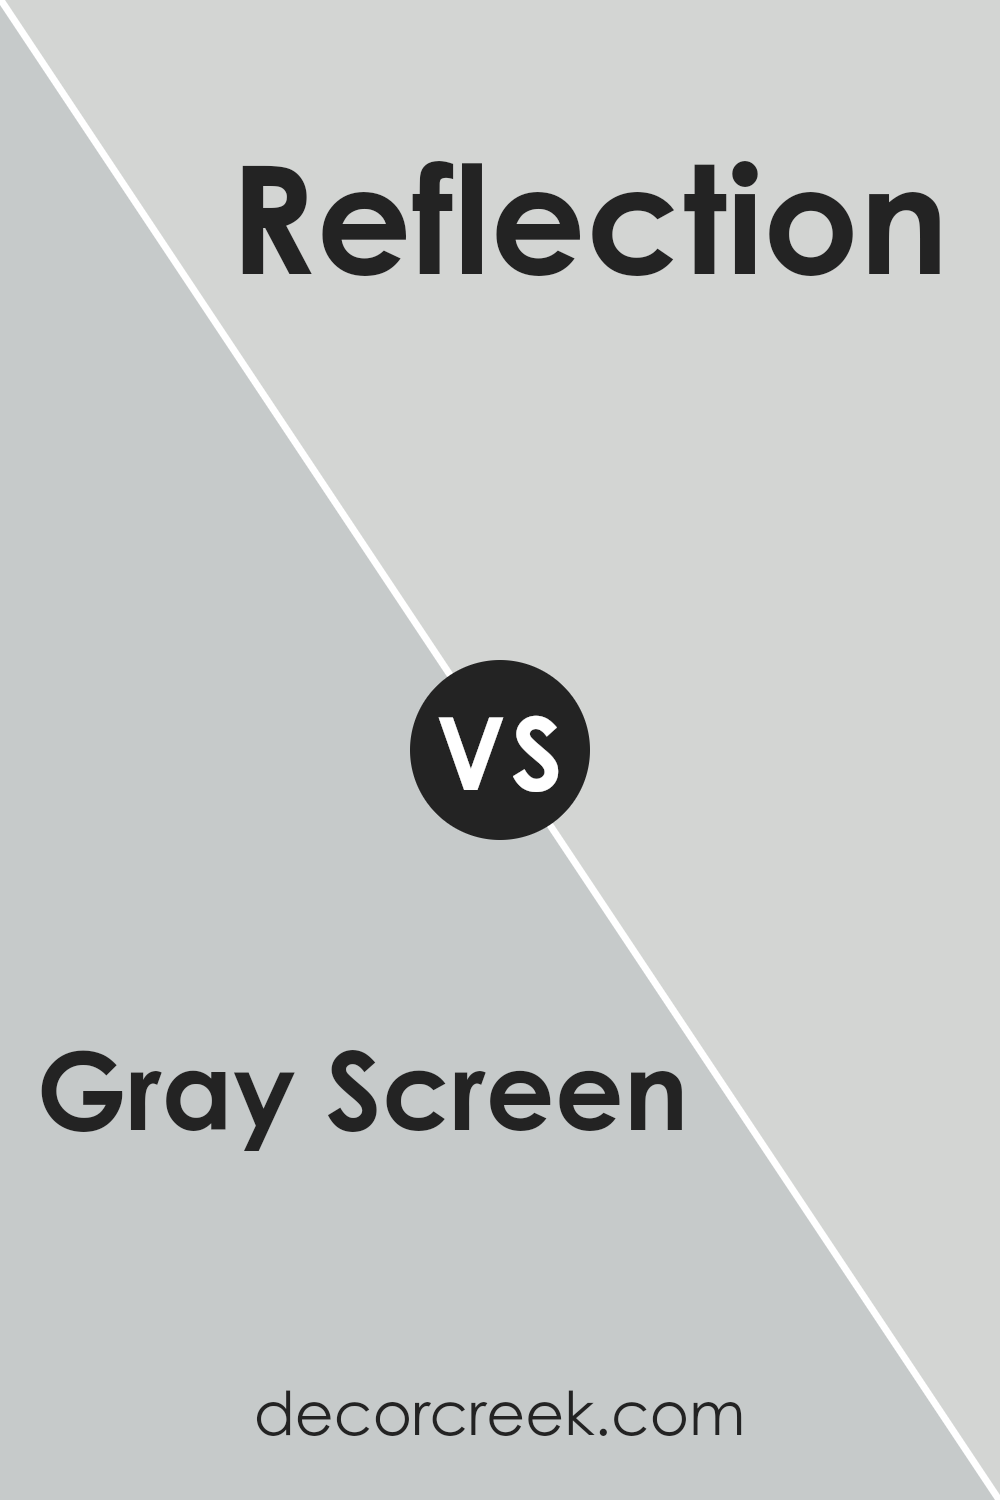 gray_screen_sw_7071_vs_reflection_sw_7661